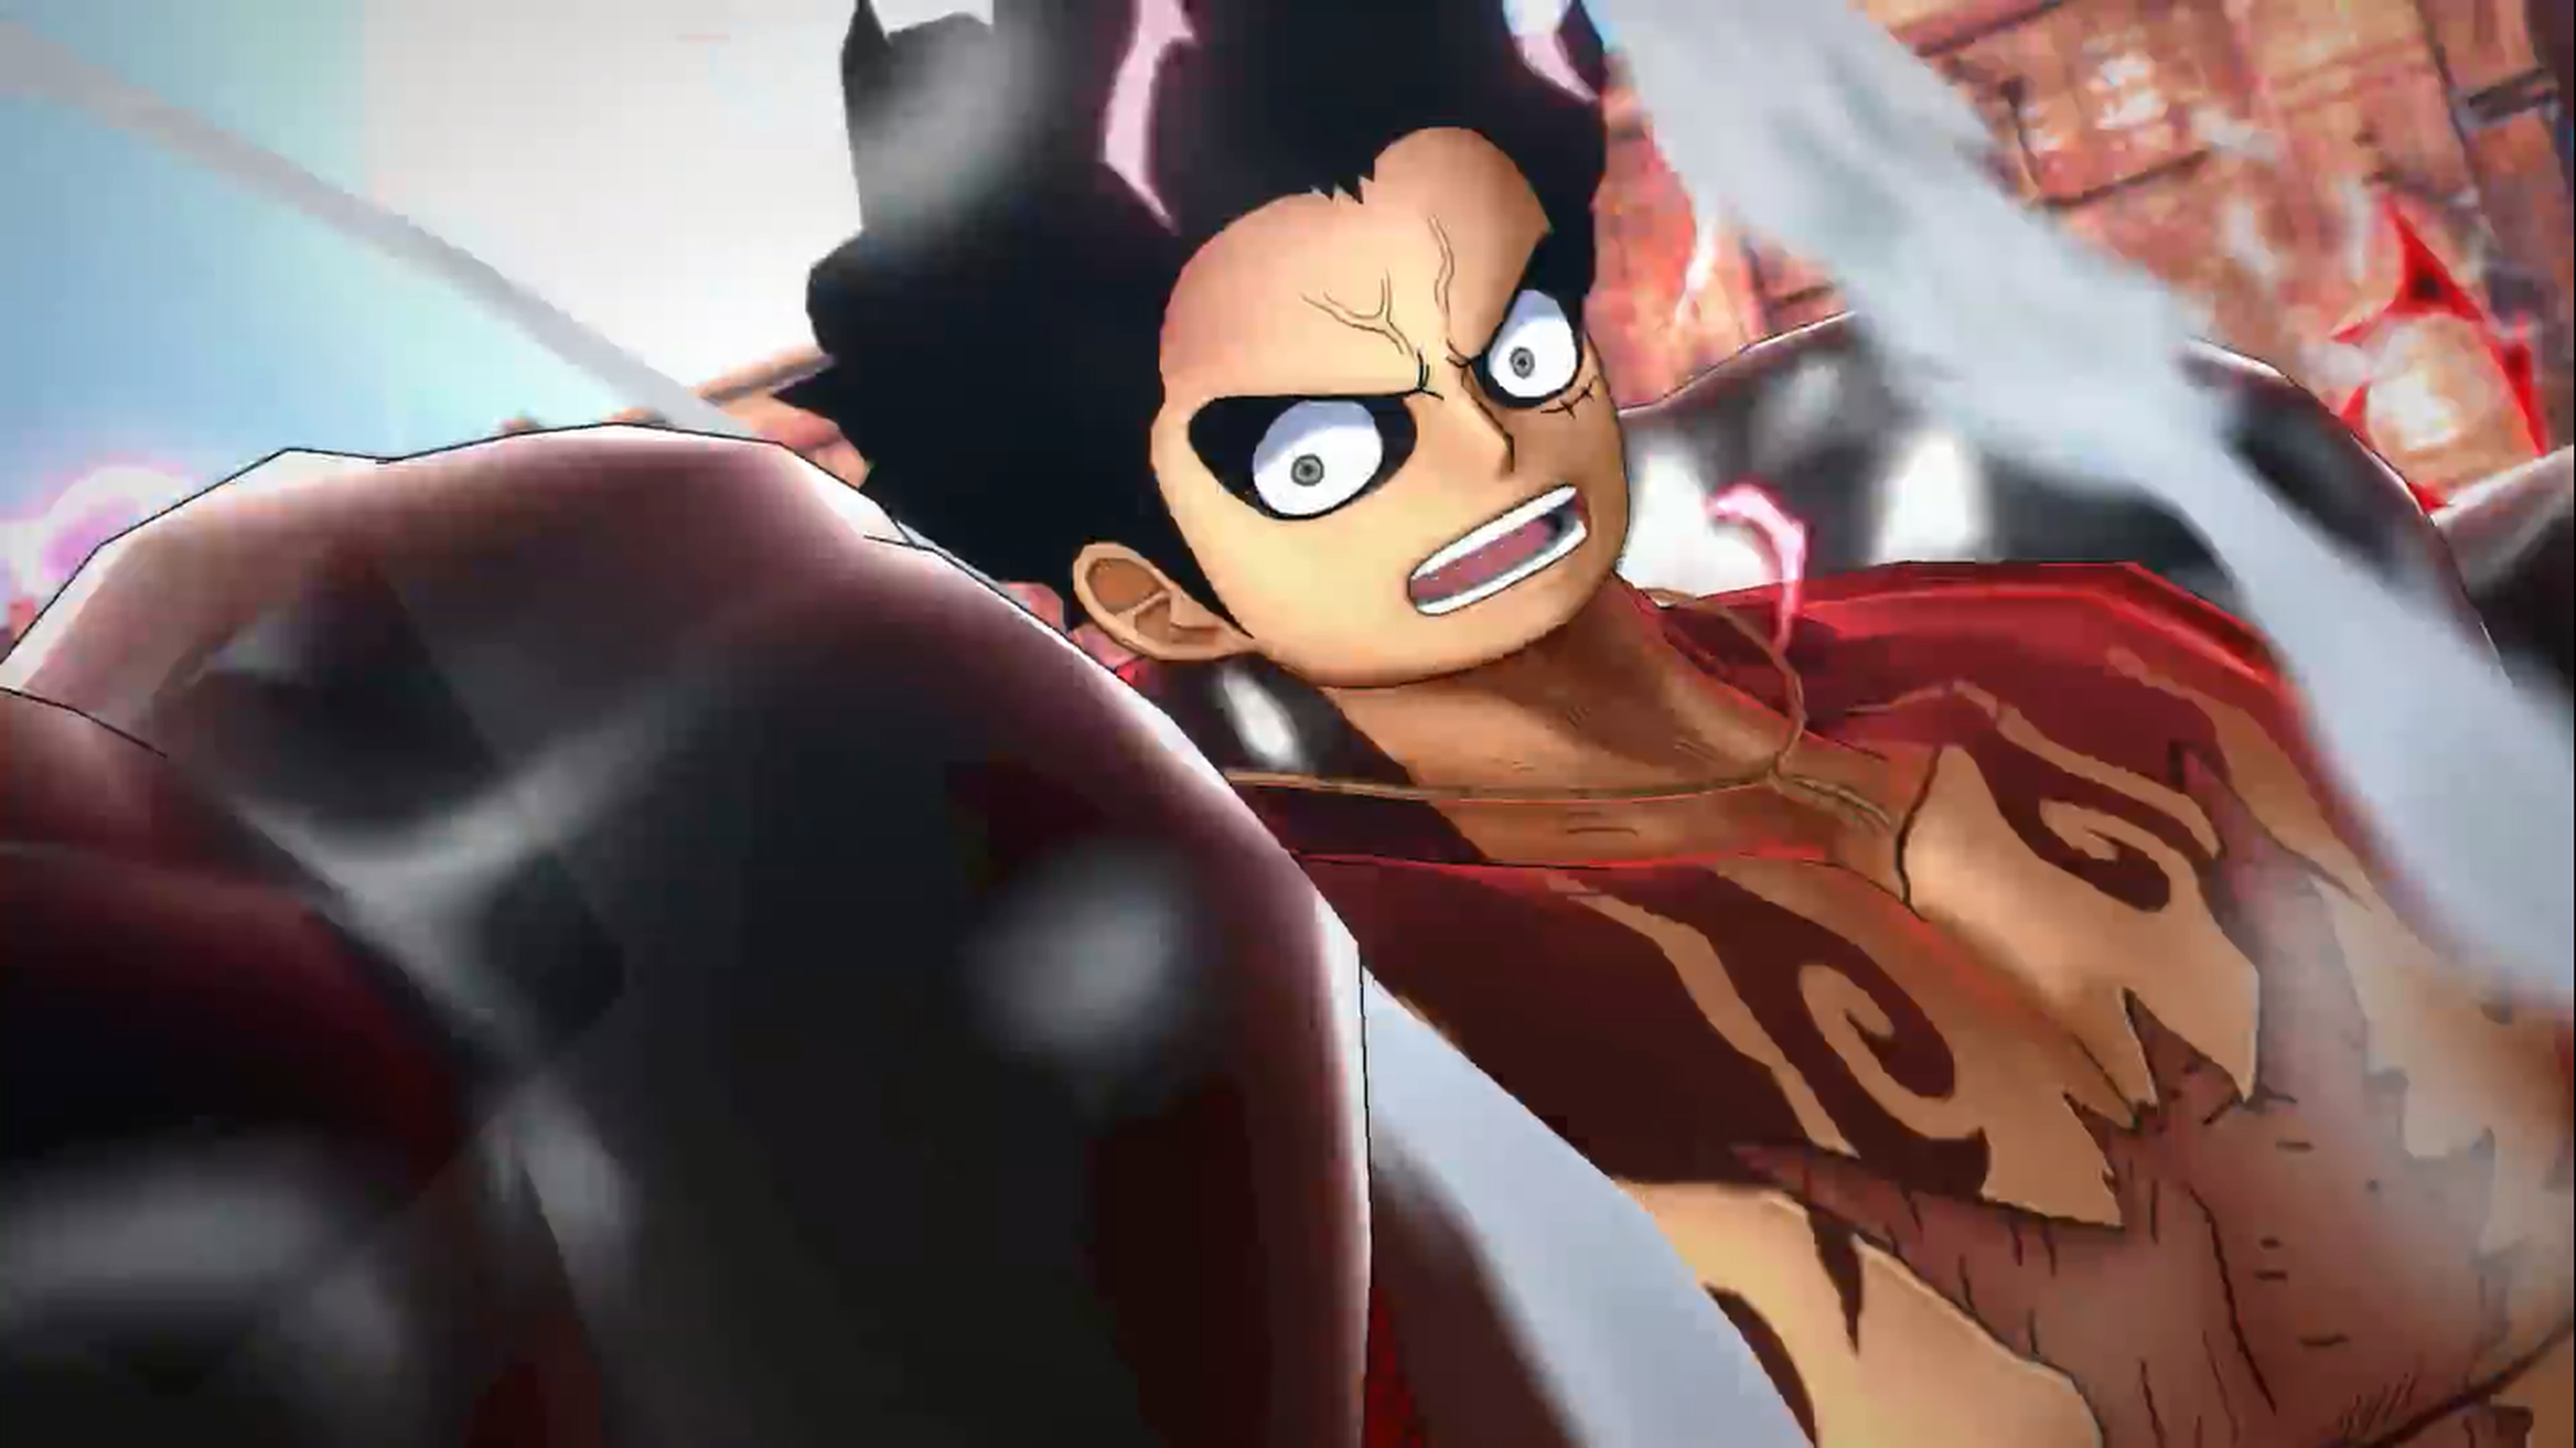 One Piece Burning Blood nuevo trailer (2)